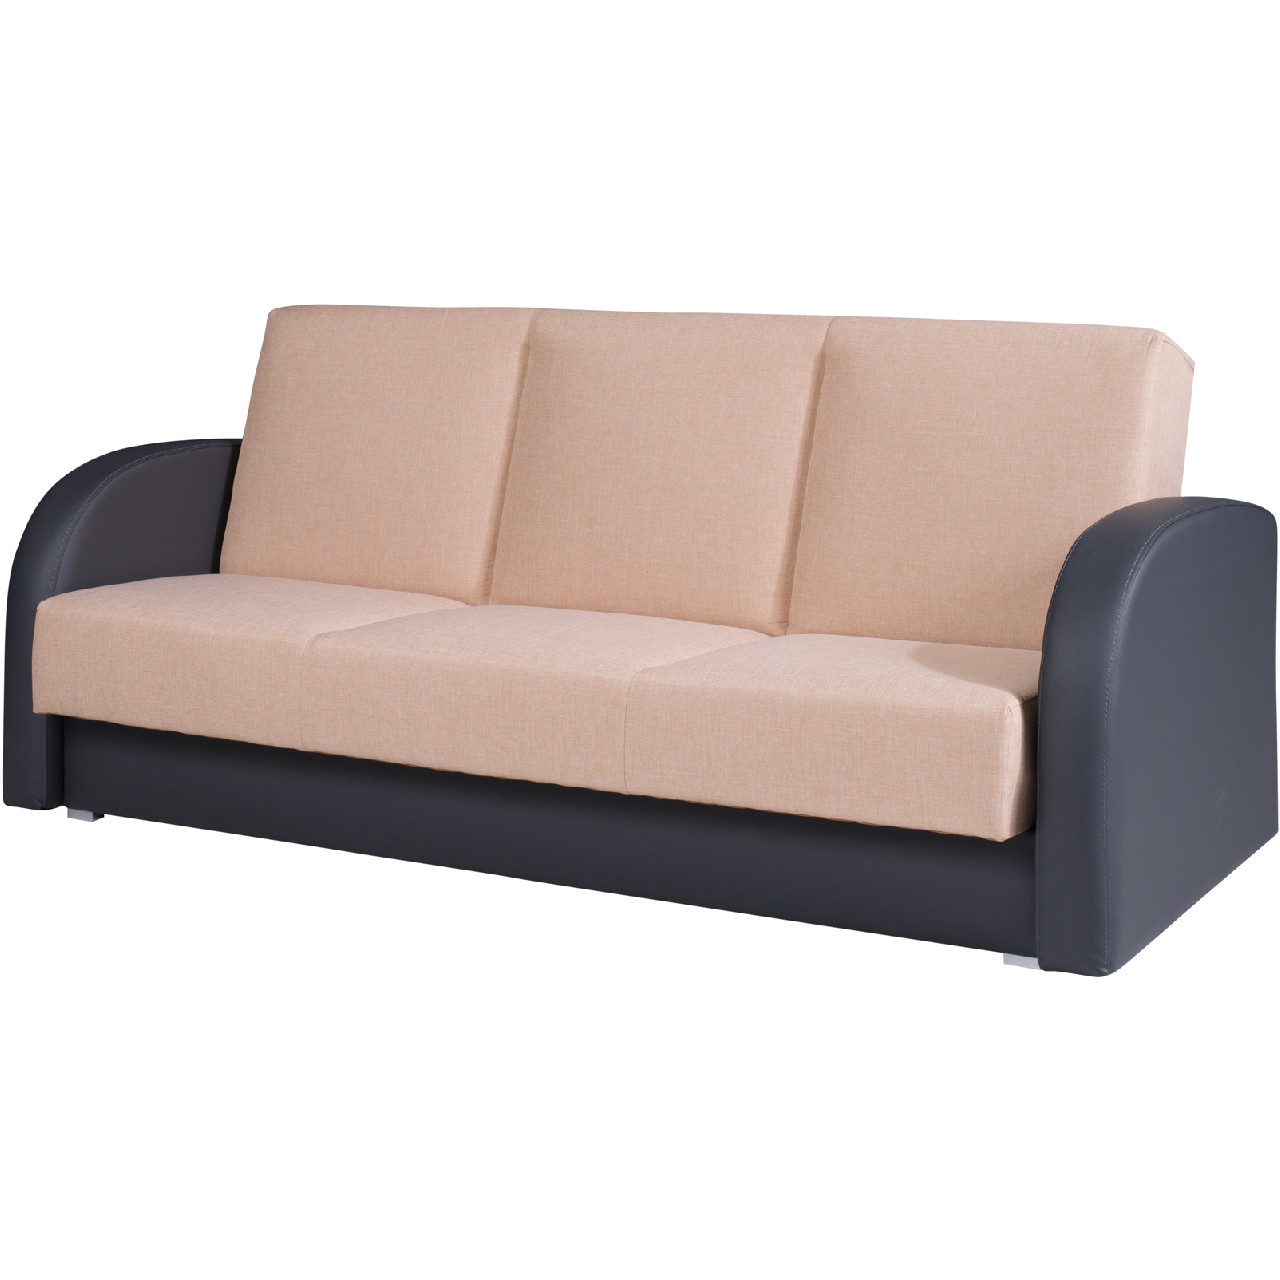 Sofa KWADRAT 2 soft 20 / lux 24